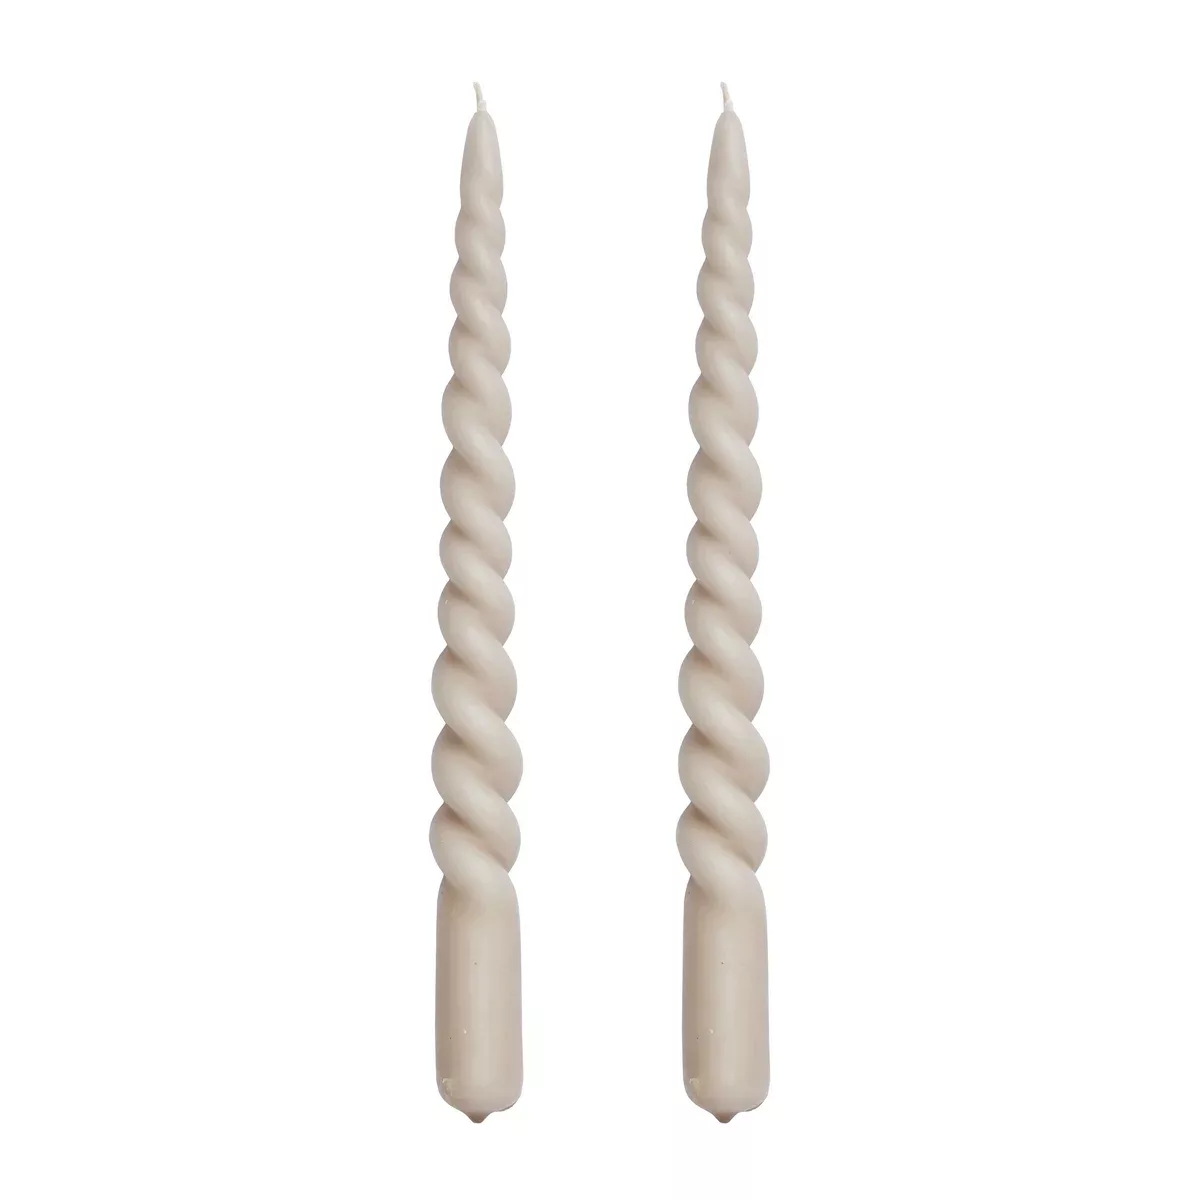 Twisted gedrehte Kerze 25cm 2er Pack Linen günstig online kaufen